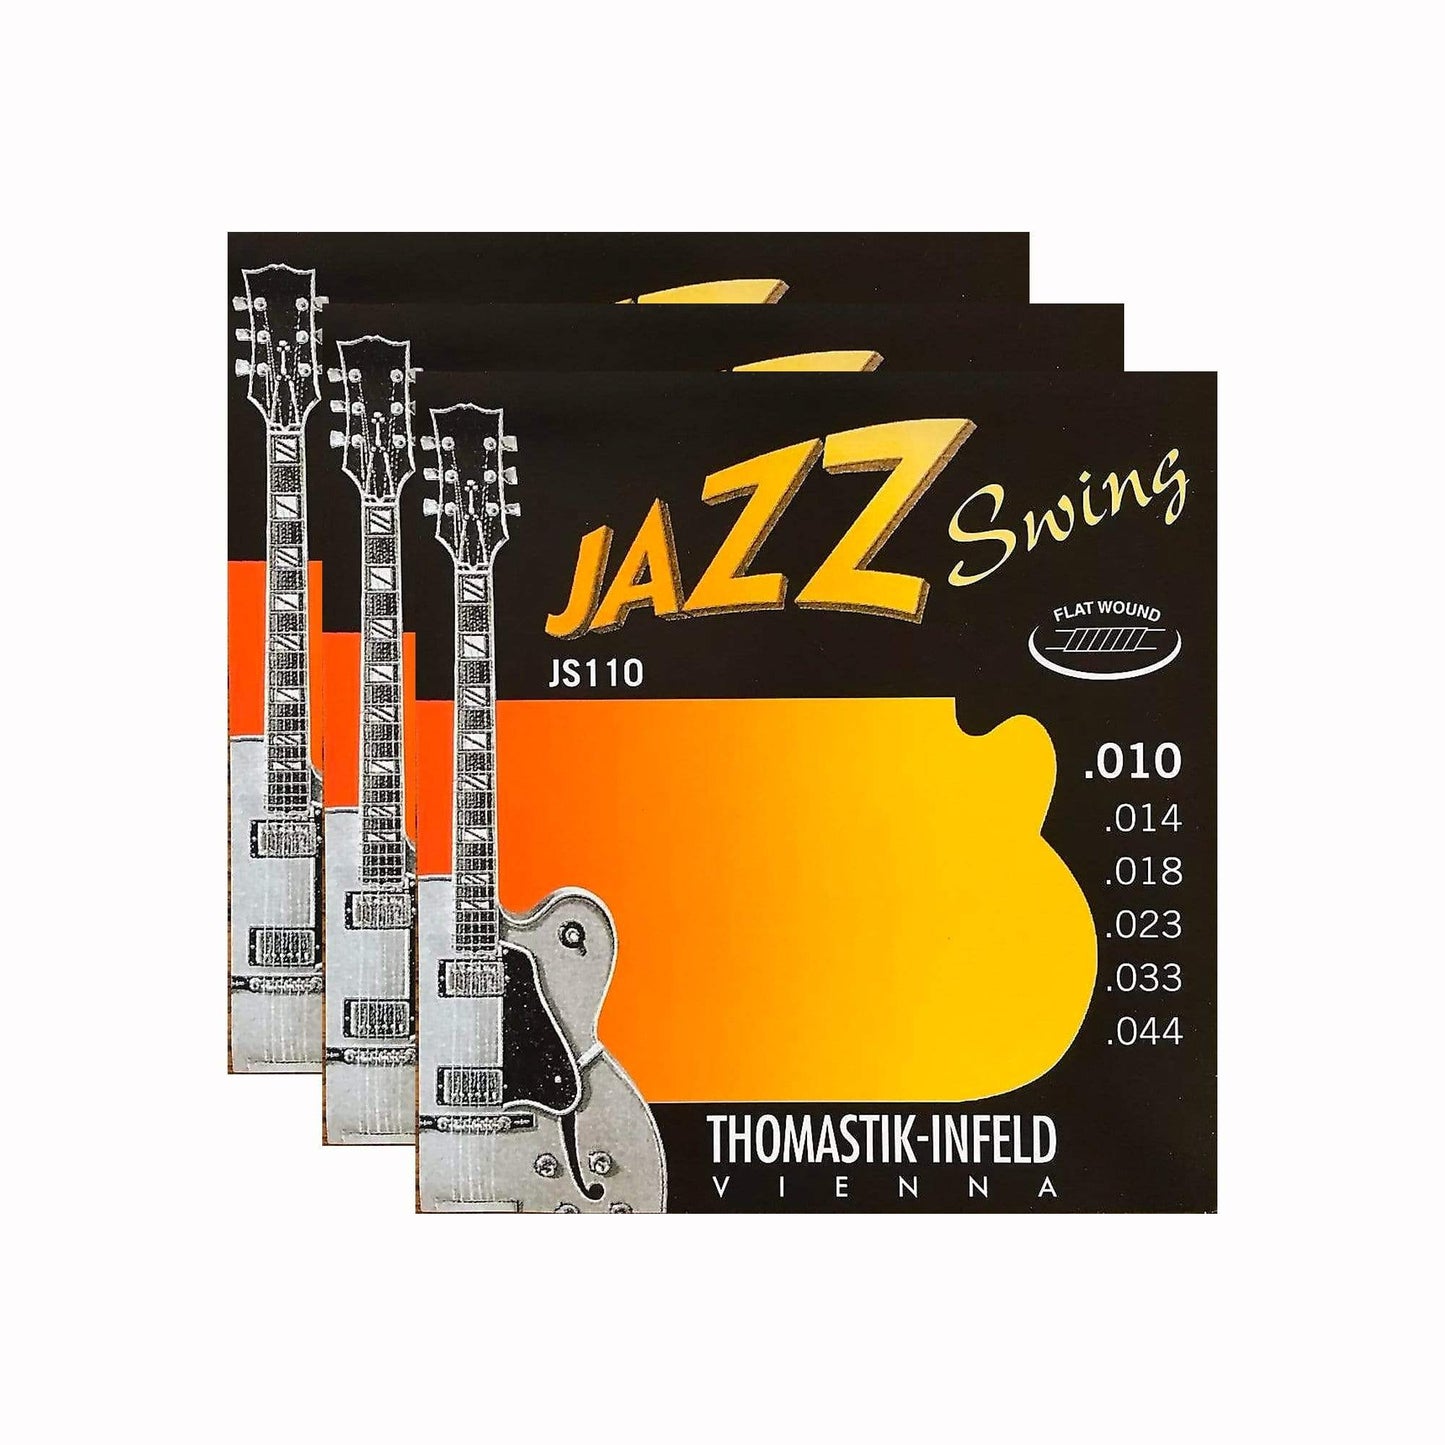 Thomastik JS110 Jazz Swing Flat 10-44 3 Pack Bundle Accessories / Strings / Guitar Strings